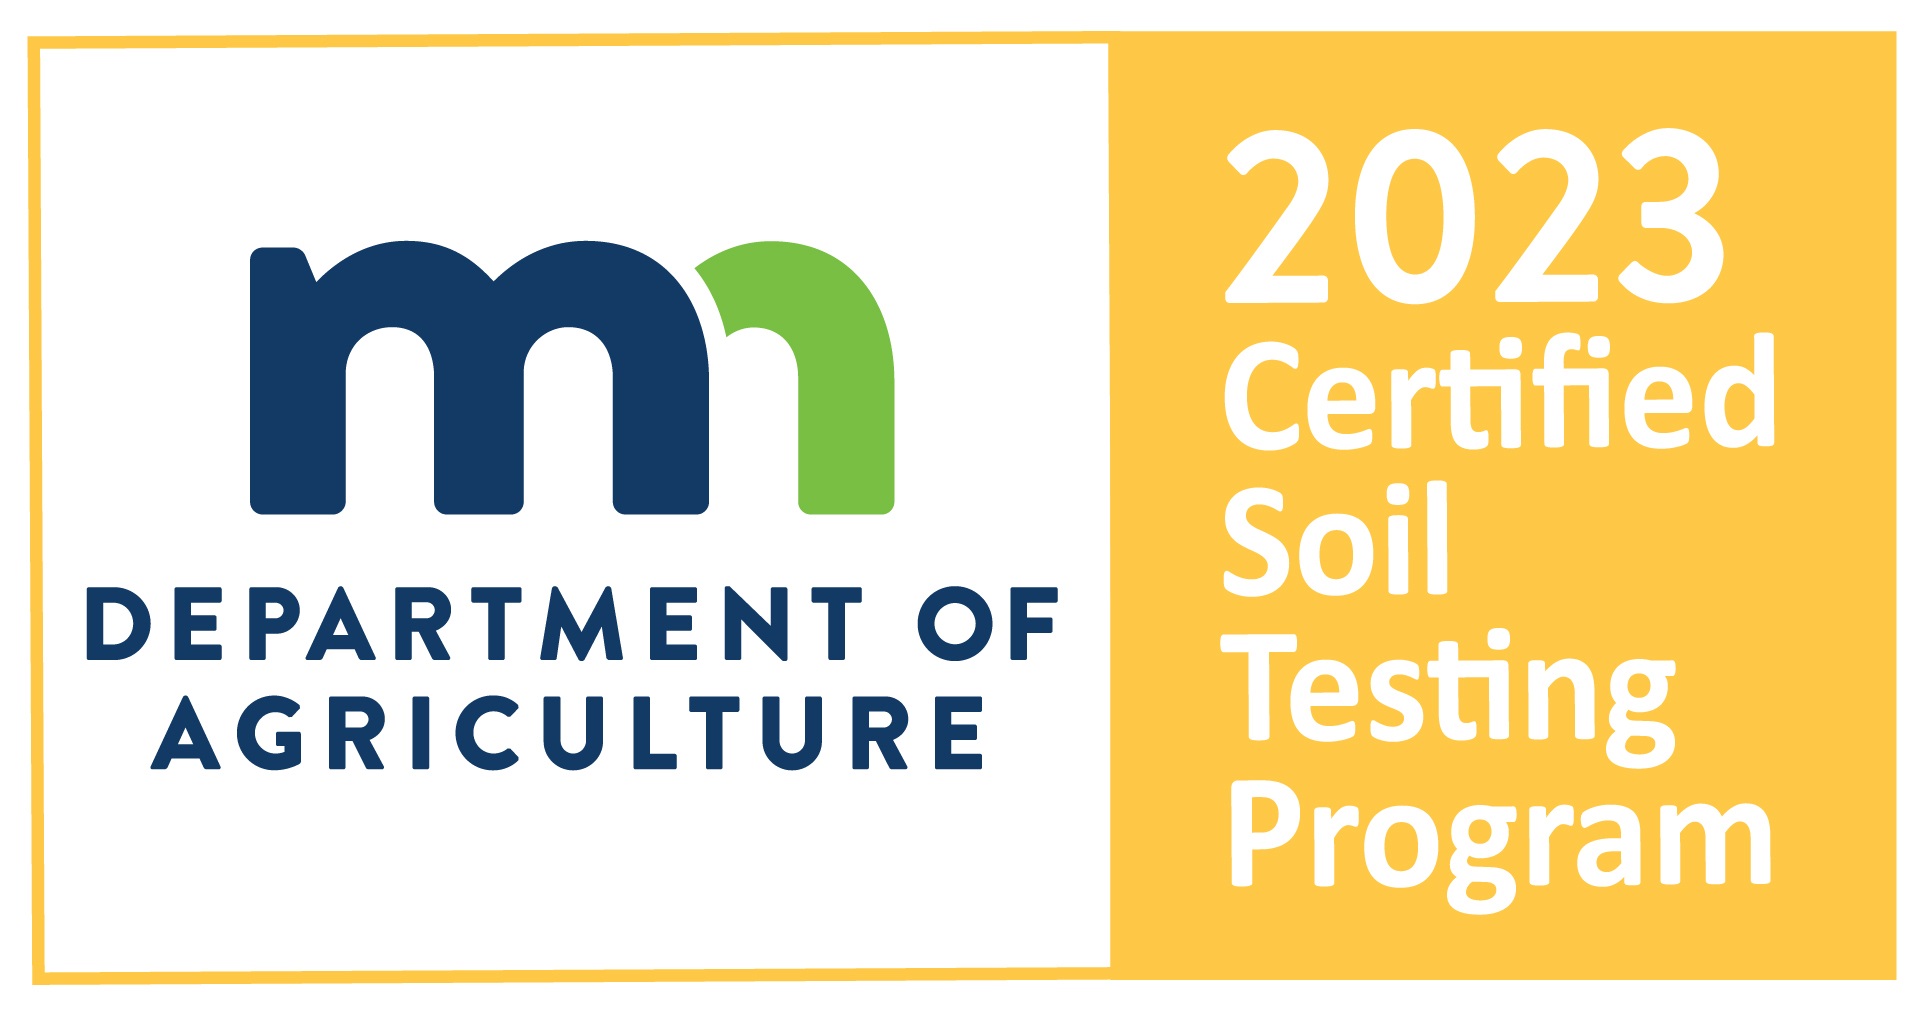 Minnesota Department of Agriculture 2023 Certified Soil Testing Program logo